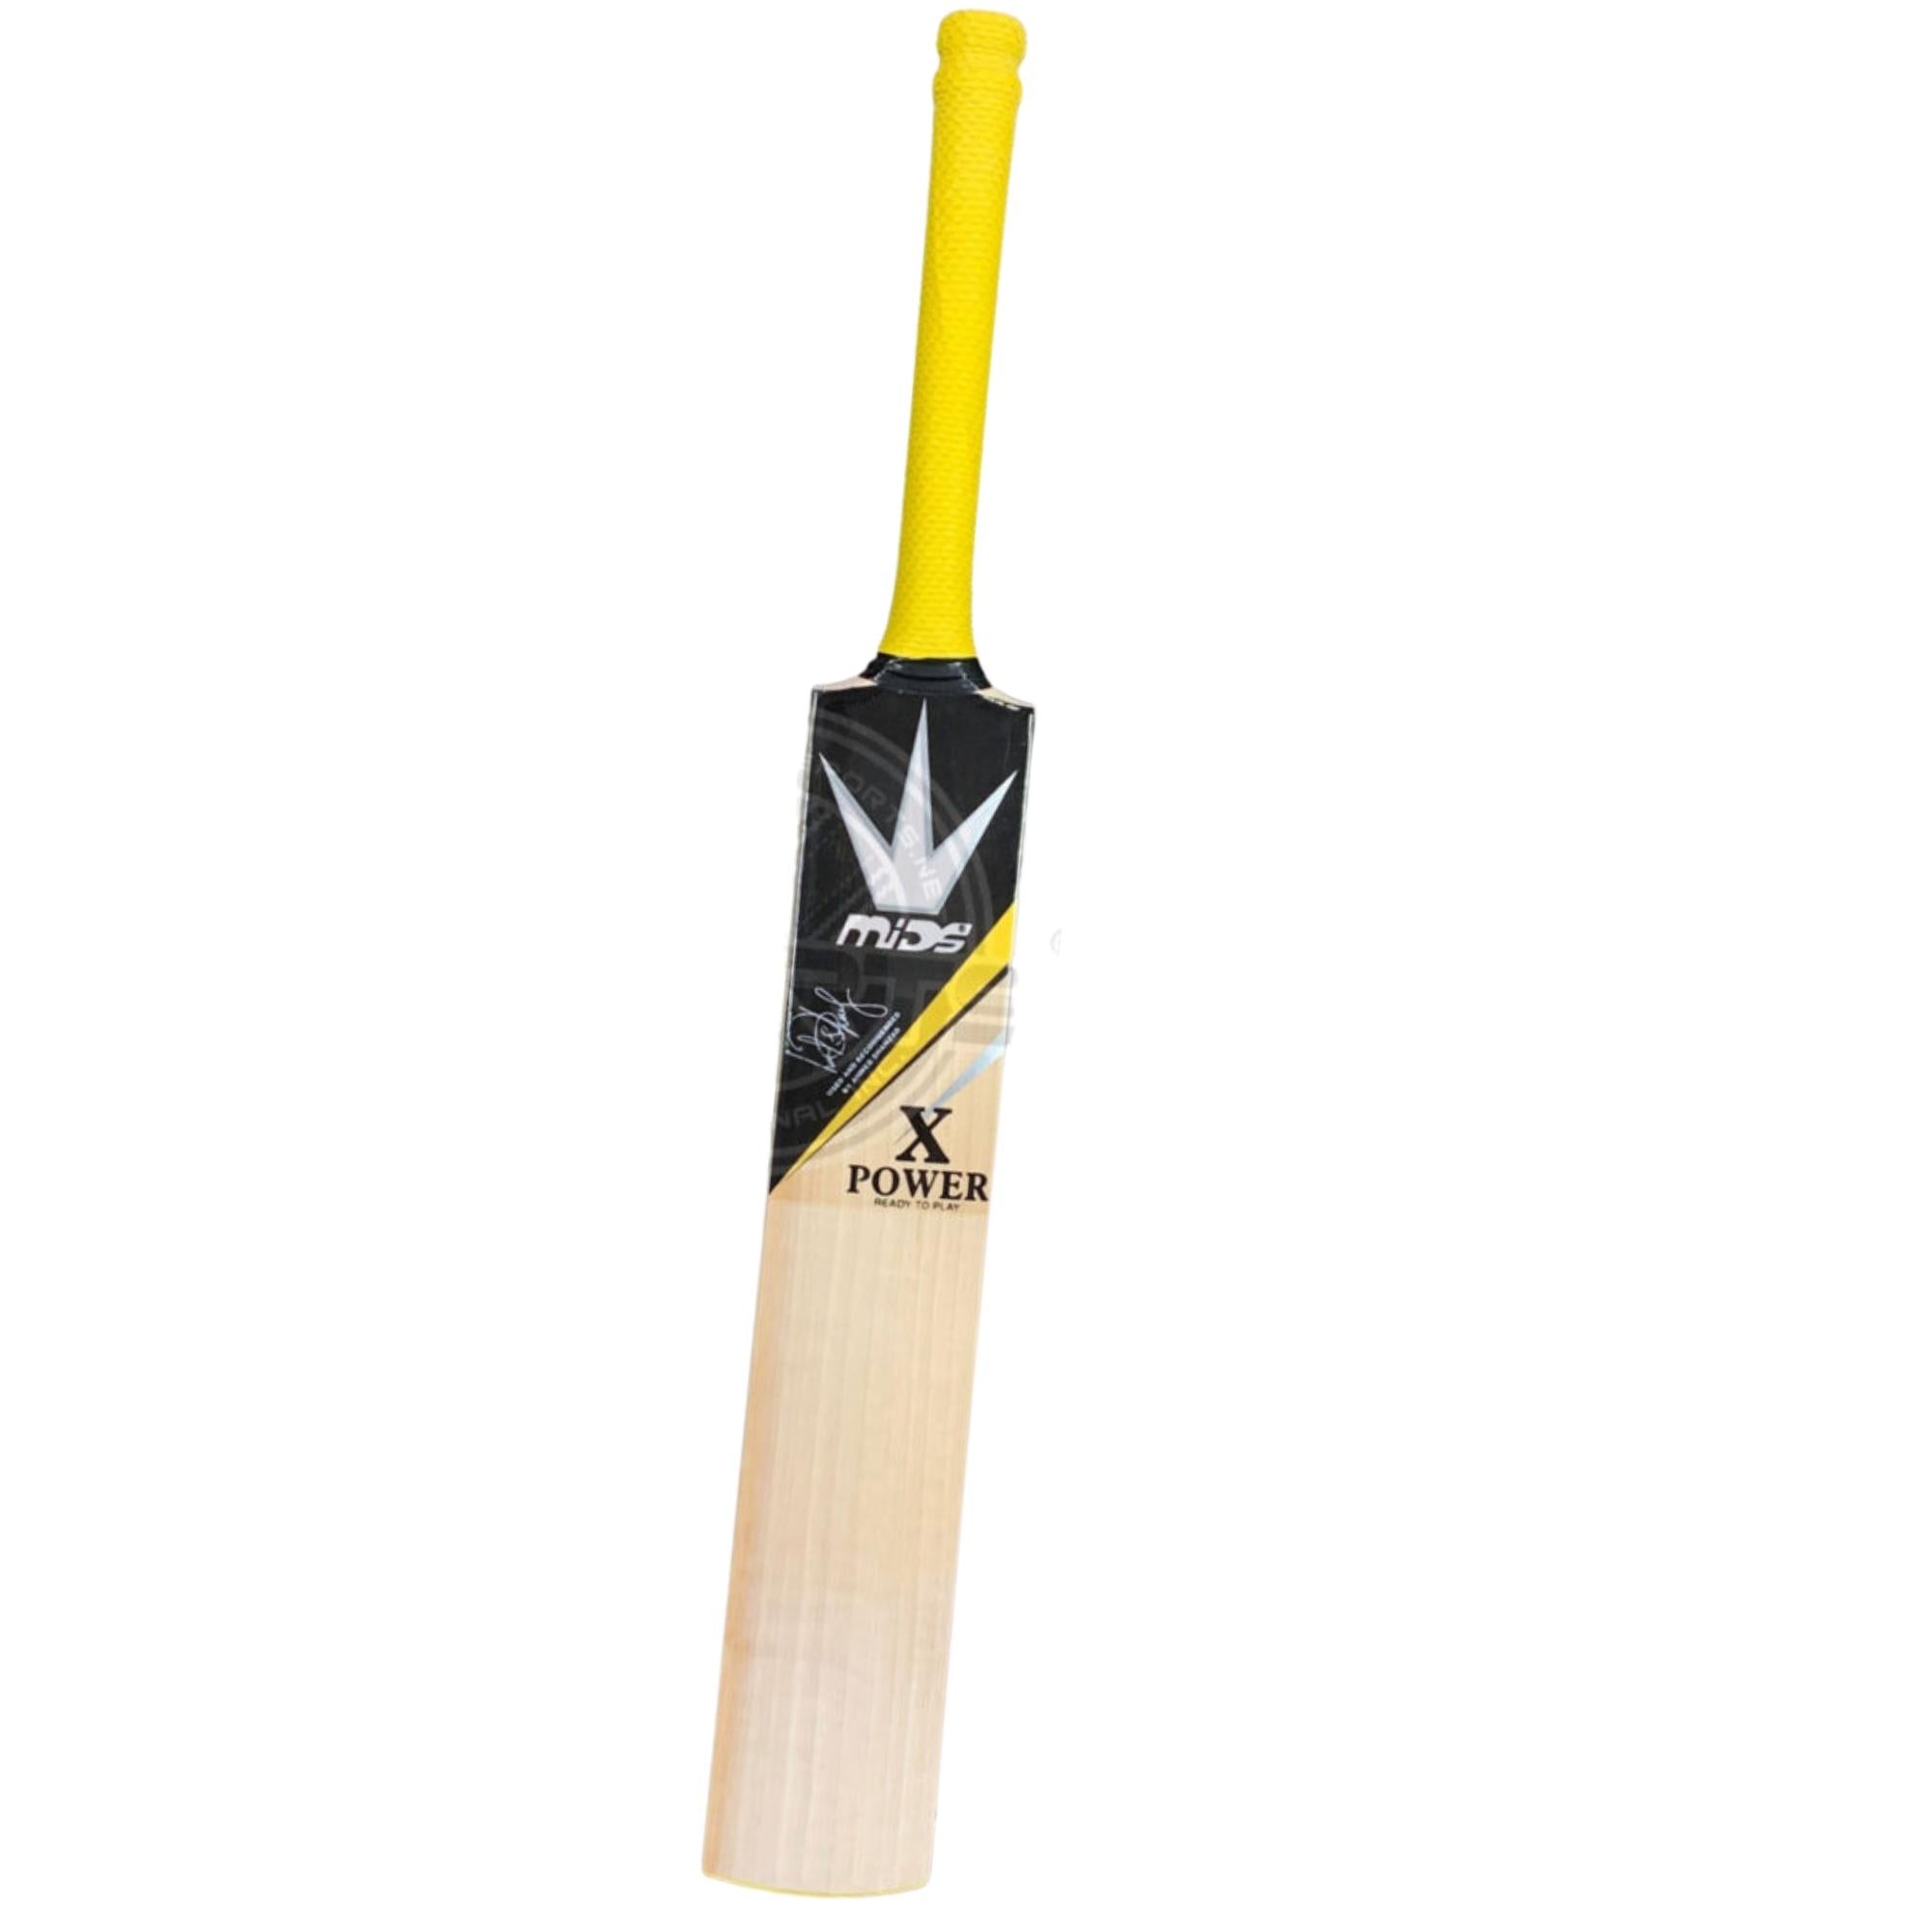 MIDS X Power Ready to Play Cricket Bat